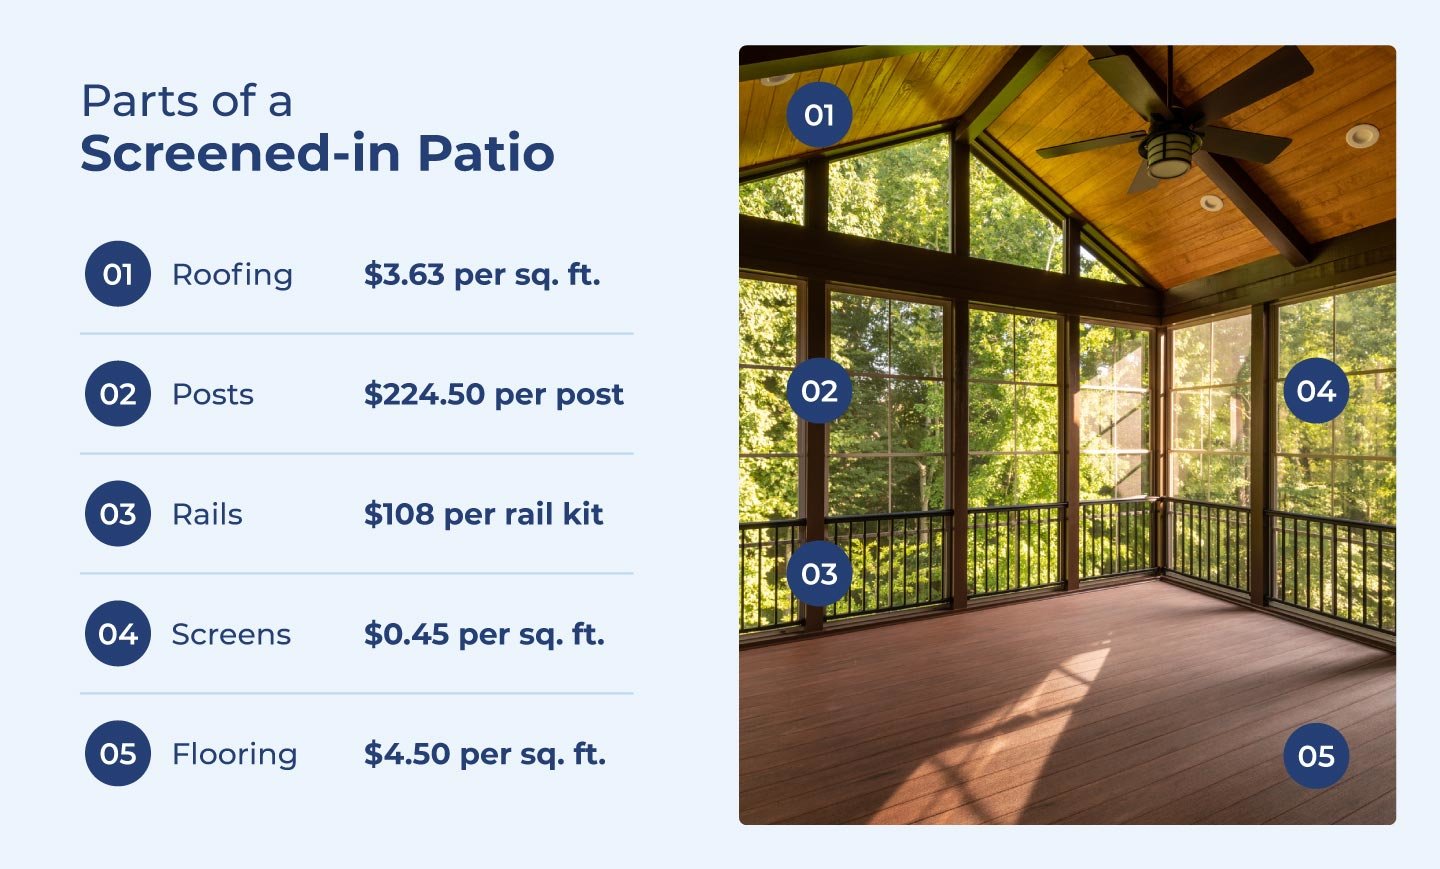 Parts of a screened-in patio are roofing ($3.63 per sq. ft.), posts ($224.50 per post), rails ($108 per rail kit), screens ($0.45 per sq. ft.), and flooring ($4.50 per sq. ft.).